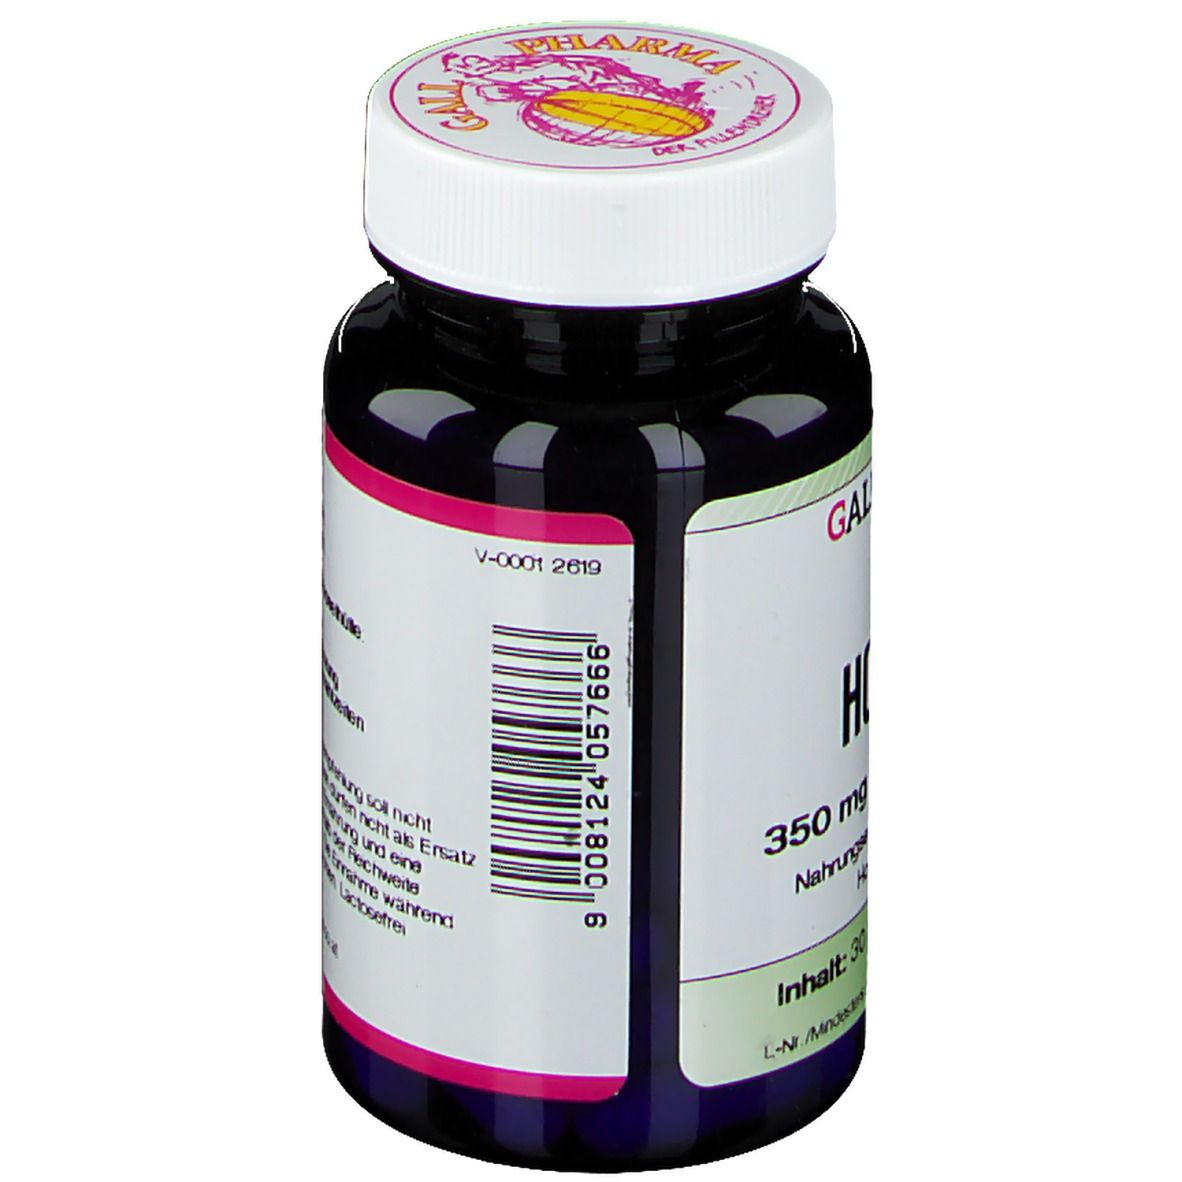 GALL PHARMA Hoodia 350 mg GPH Kapseln